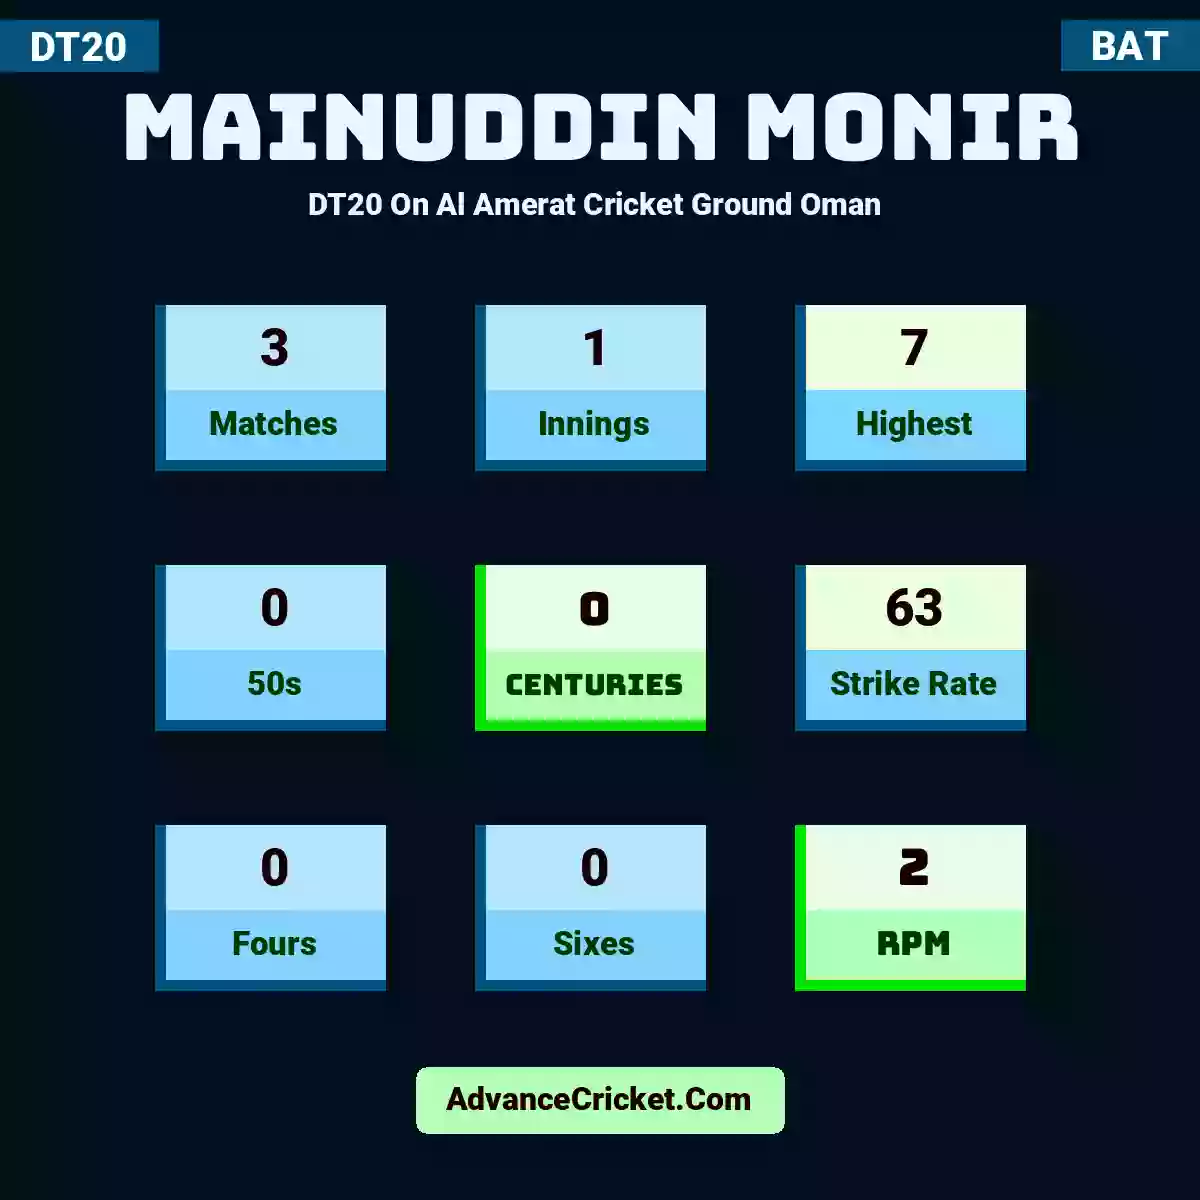 Mainuddin Monir DT20  On Al Amerat Cricket Ground Oman , Mainuddin Monir played 3 matches, scored 7 runs as highest, 0 half-centuries, and 0 centuries, with a strike rate of 63. M.Monir hit 0 fours and 0 sixes, with an RPM of 2.